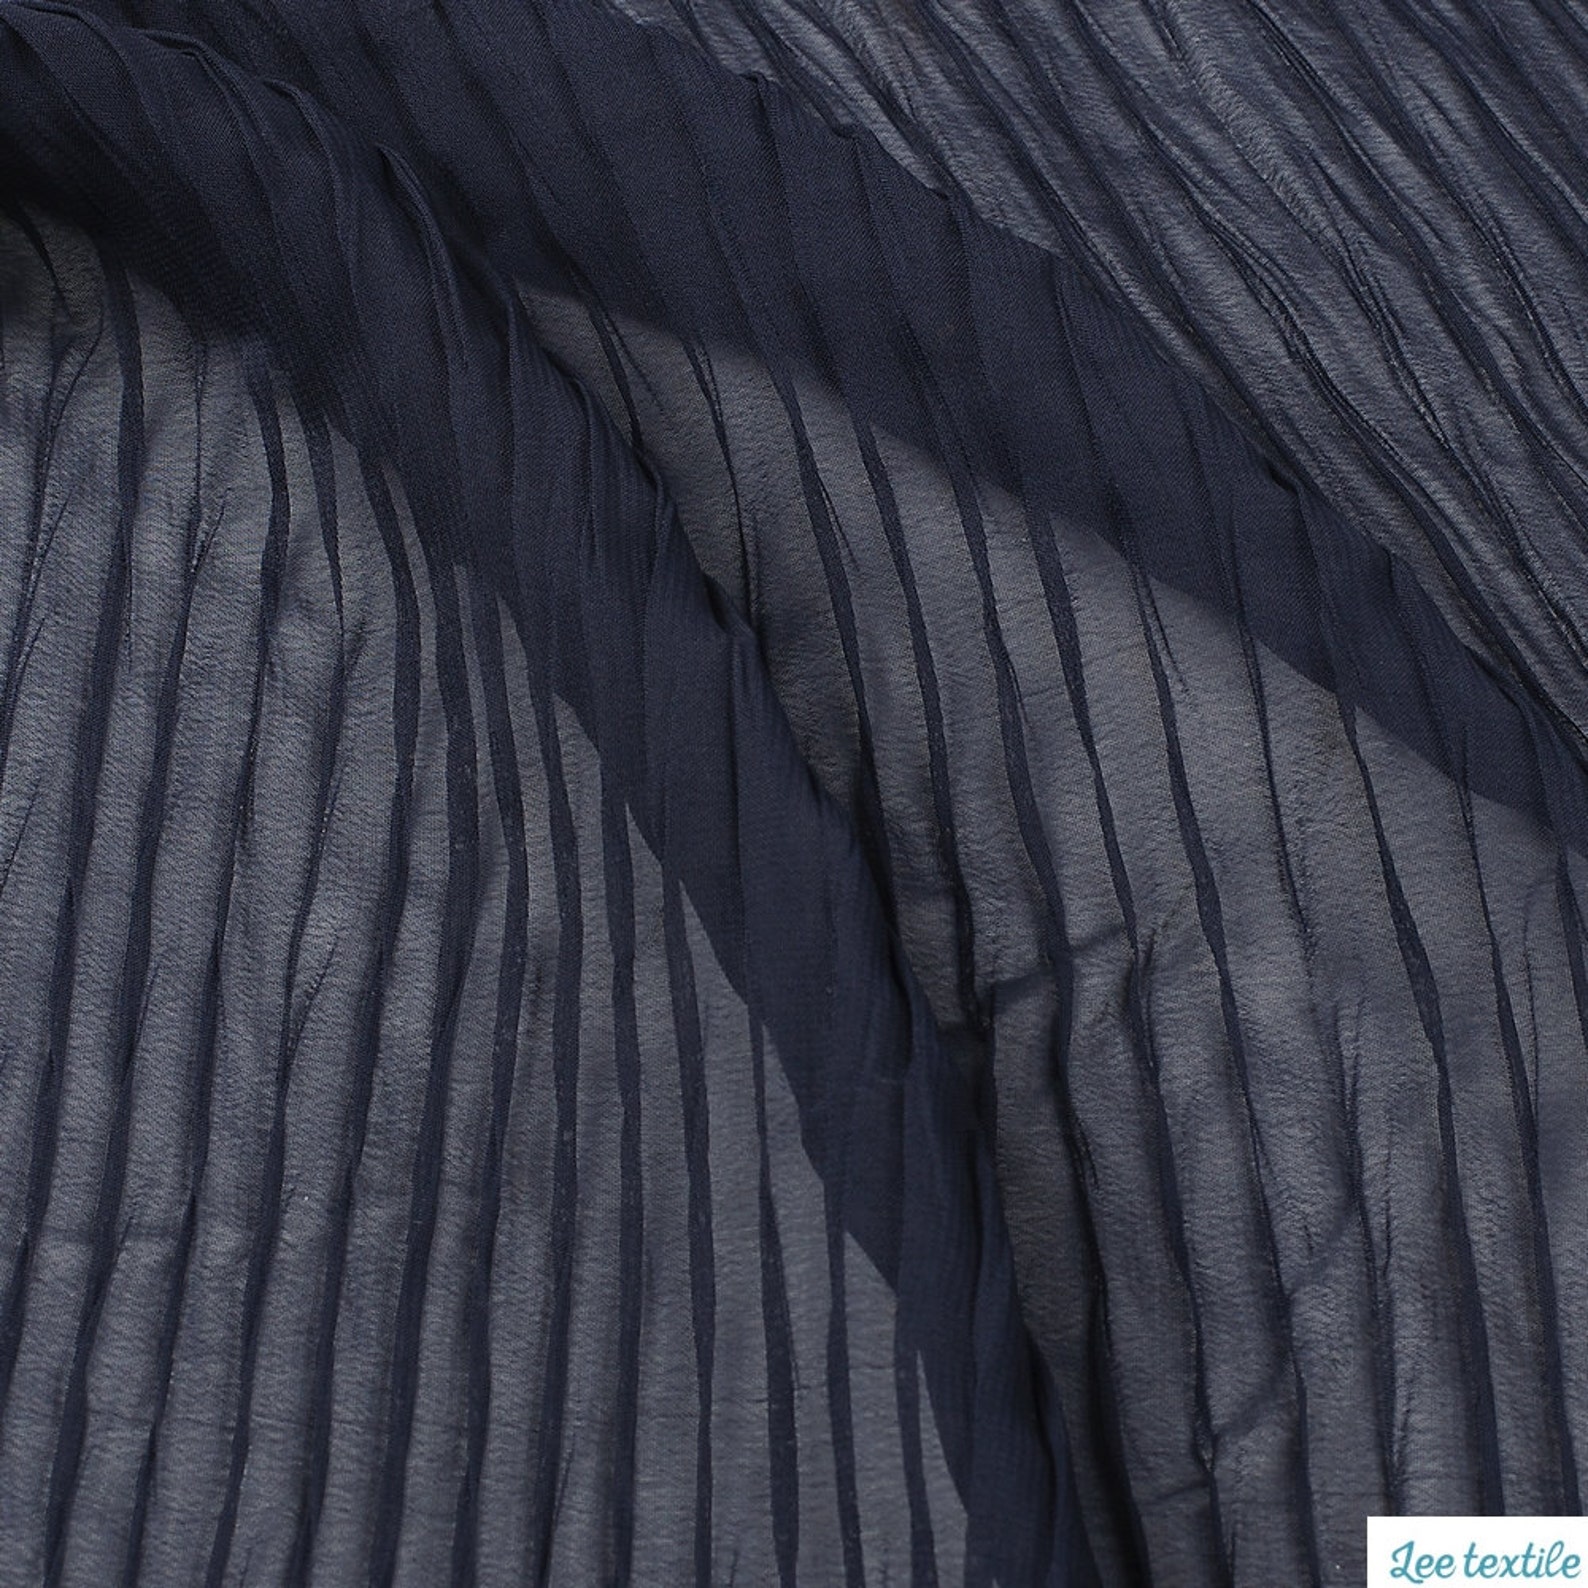 Black Pleated chiffon fabric by the yard 3D Ruffled dress | Etsy